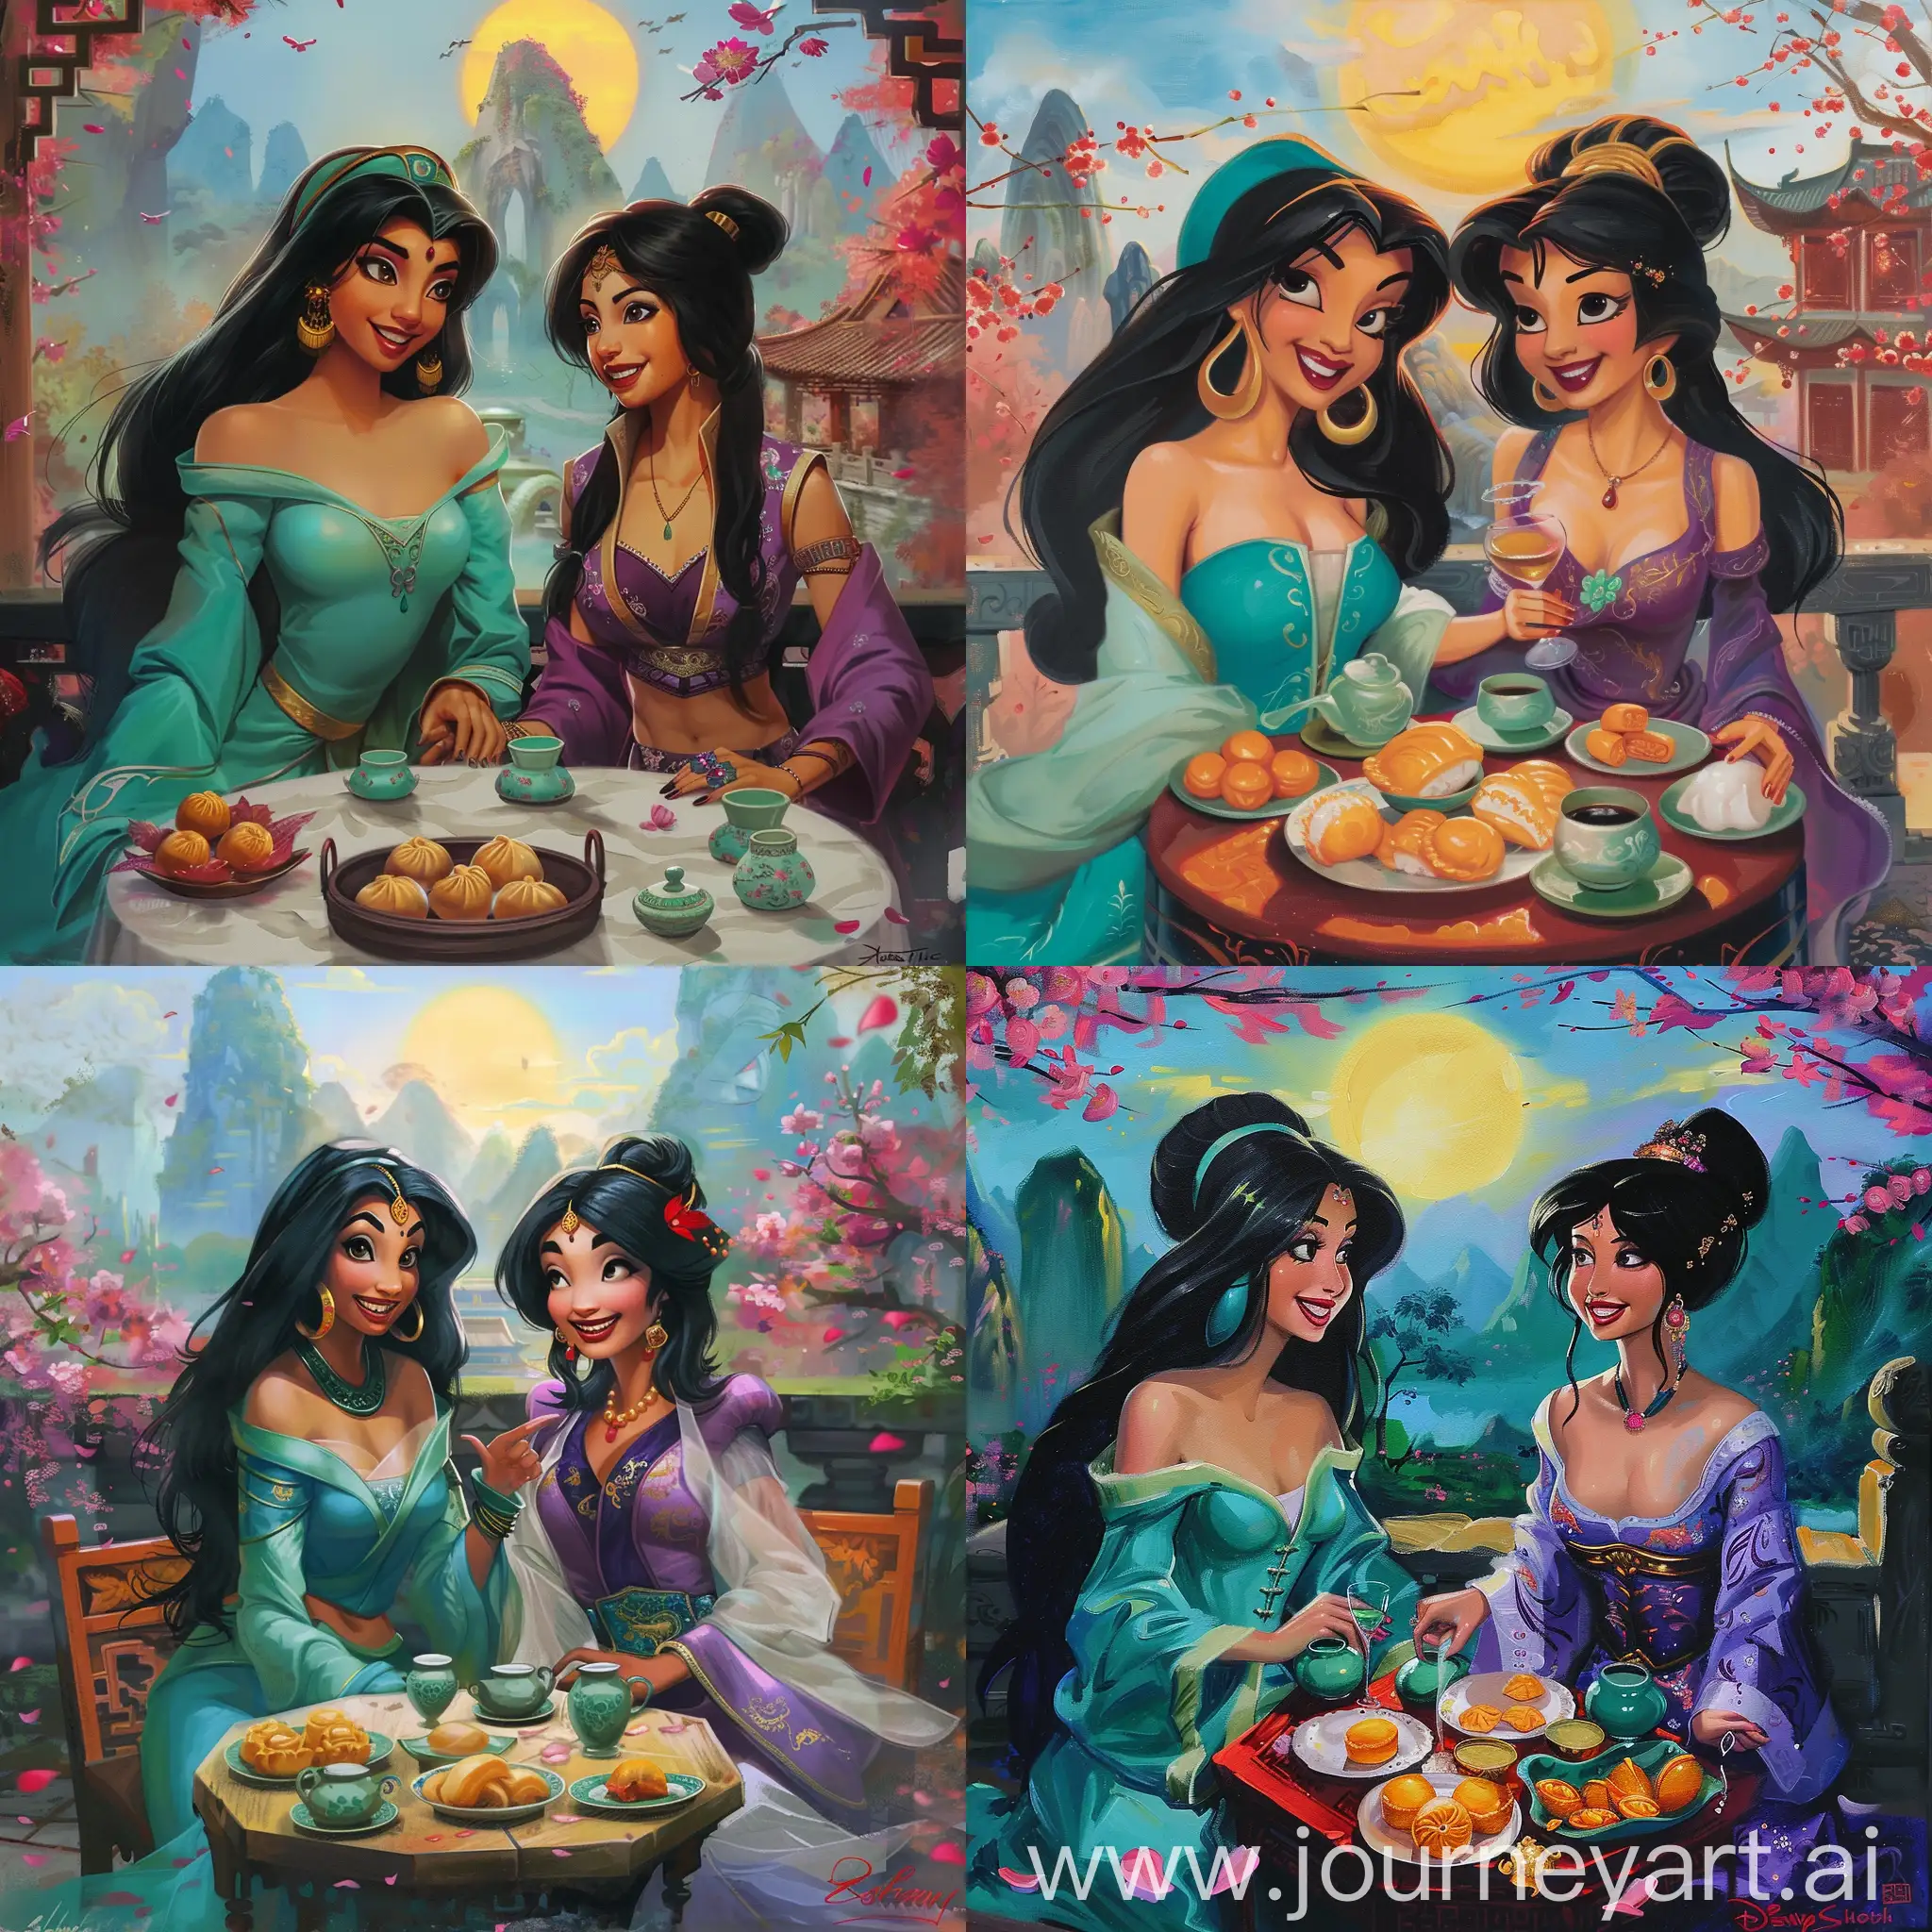 Disney-Princesses-Jasmine-and-Shanti-Enjoy-Dim-Sum-in-Chinese-Summer-Palace-Garden